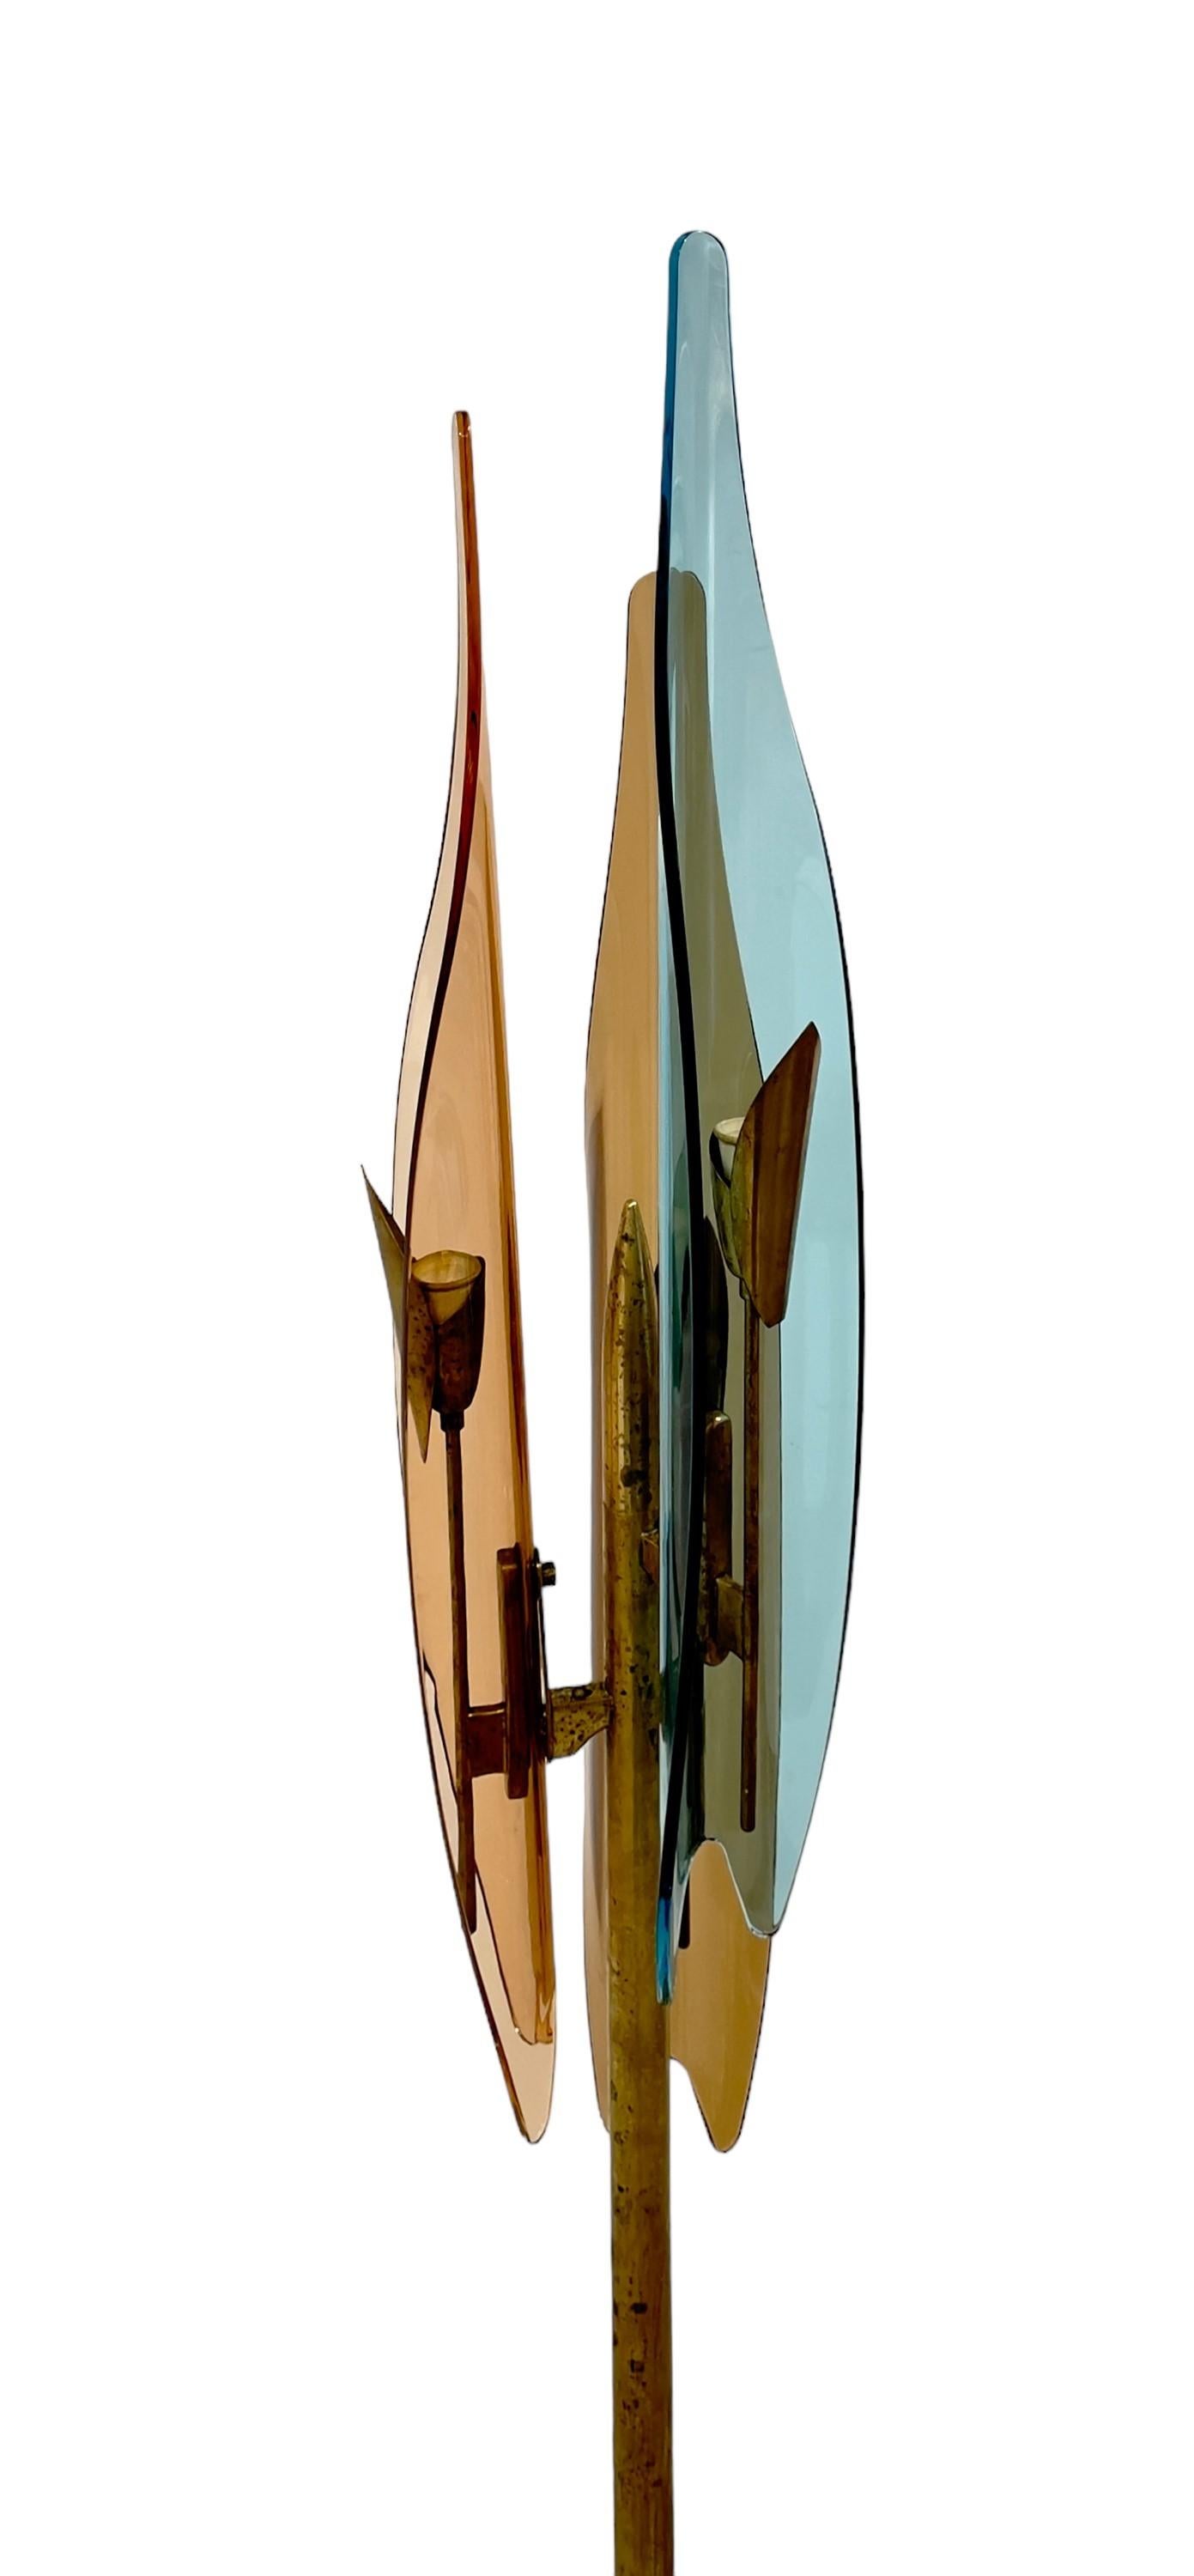 Rare Dahlia floor lamp with brass frame curved colored glass shades. Designer Max Ingrand , manufacturer Fontana Arte. C1950s.